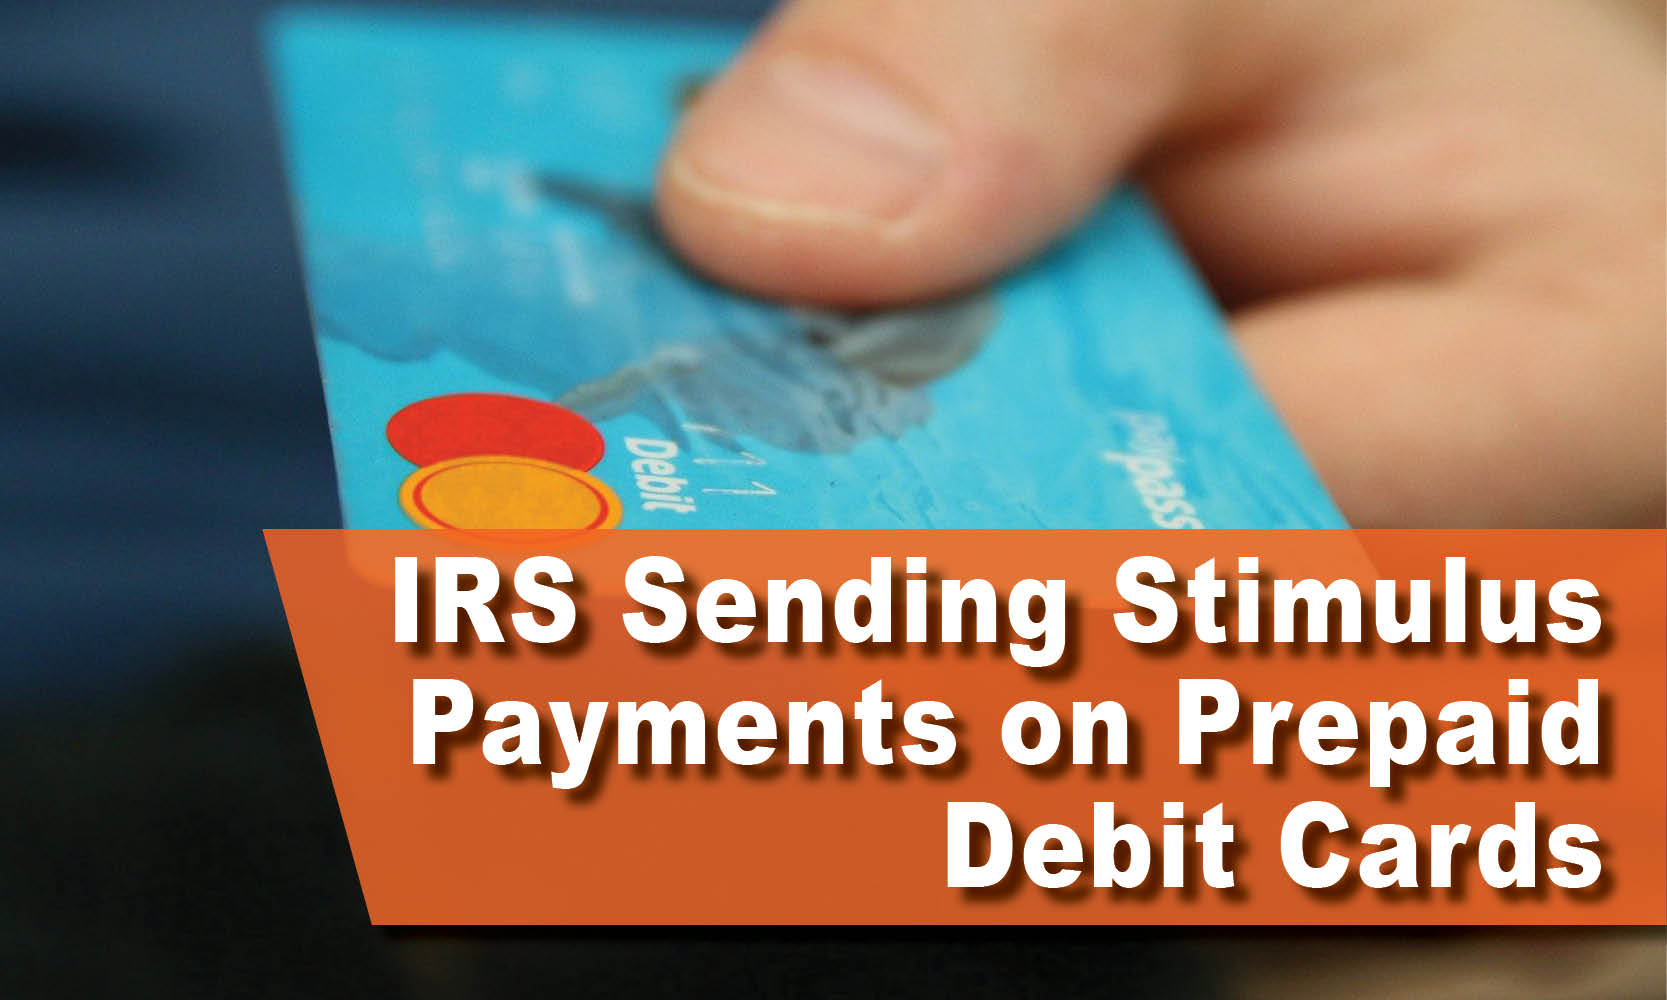 IRS Sending Stimulus Payments on Prepaid Debit Cards